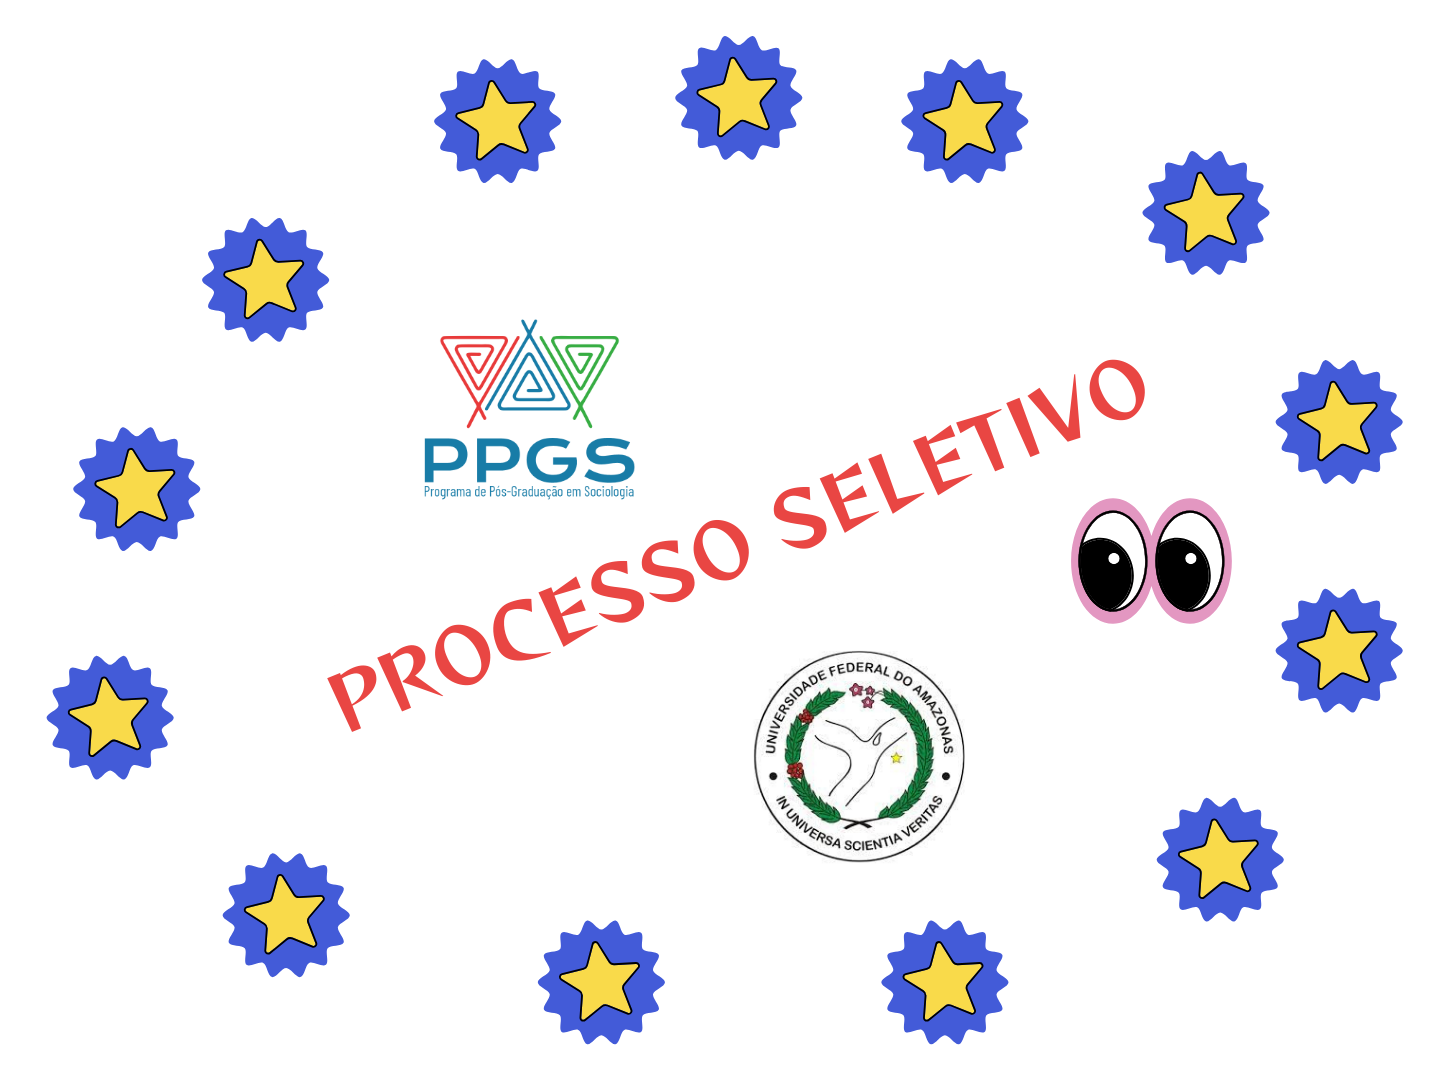 PROCESSO SELETIVO - TURMA 2024/2